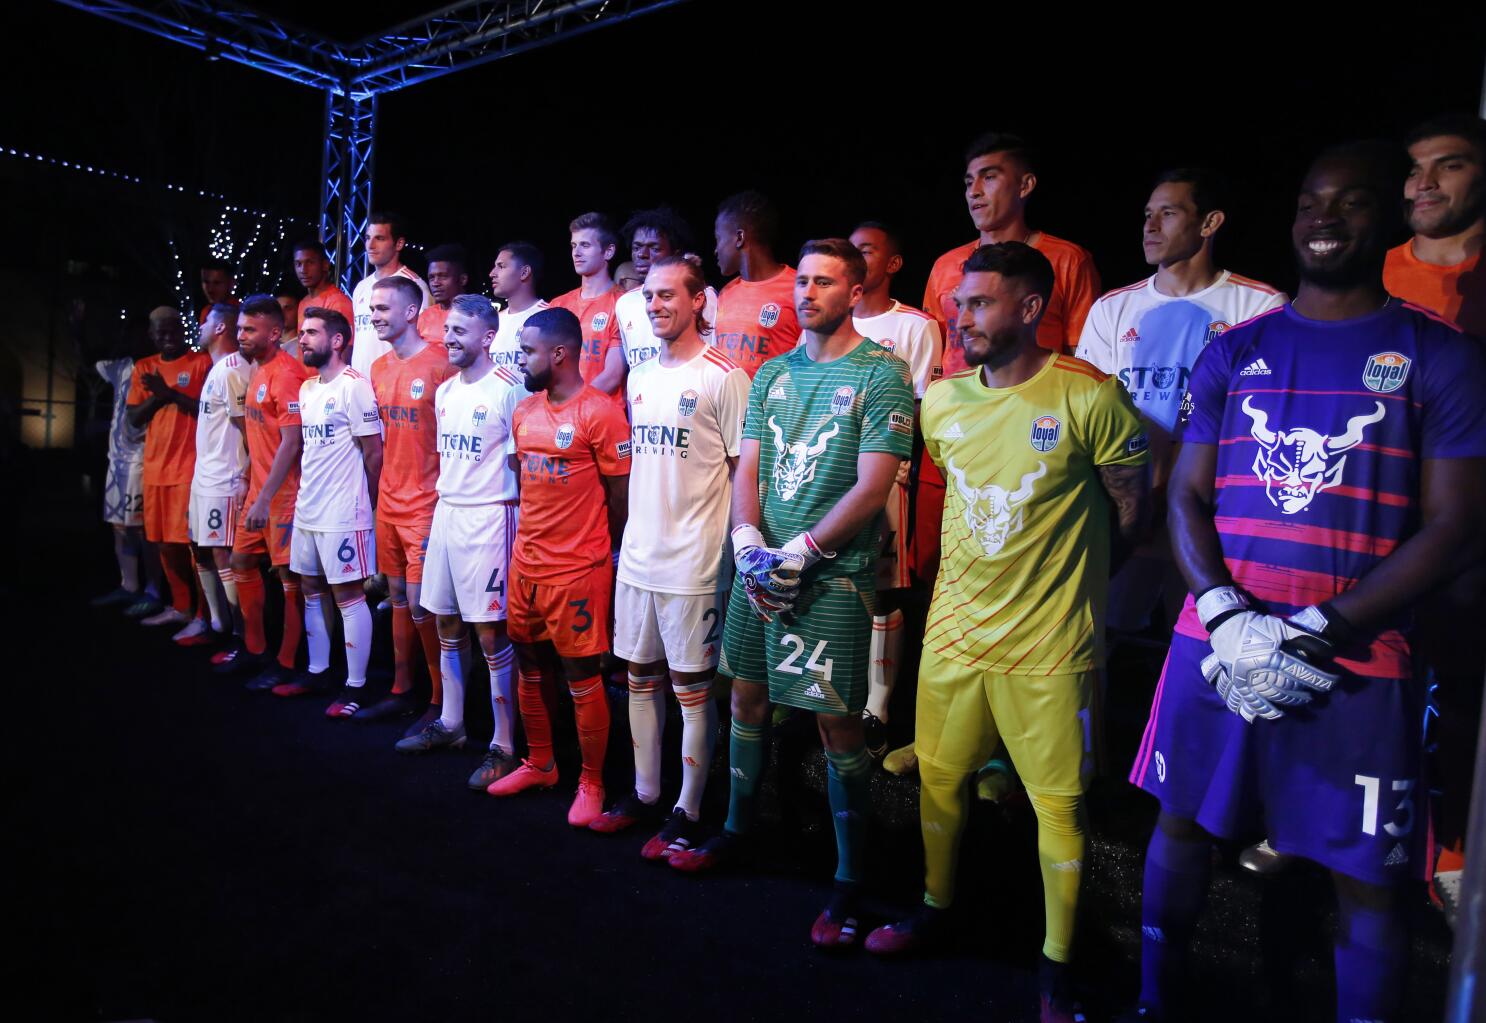 Loyal soccer team shows off uniforms, readies for inaugural season